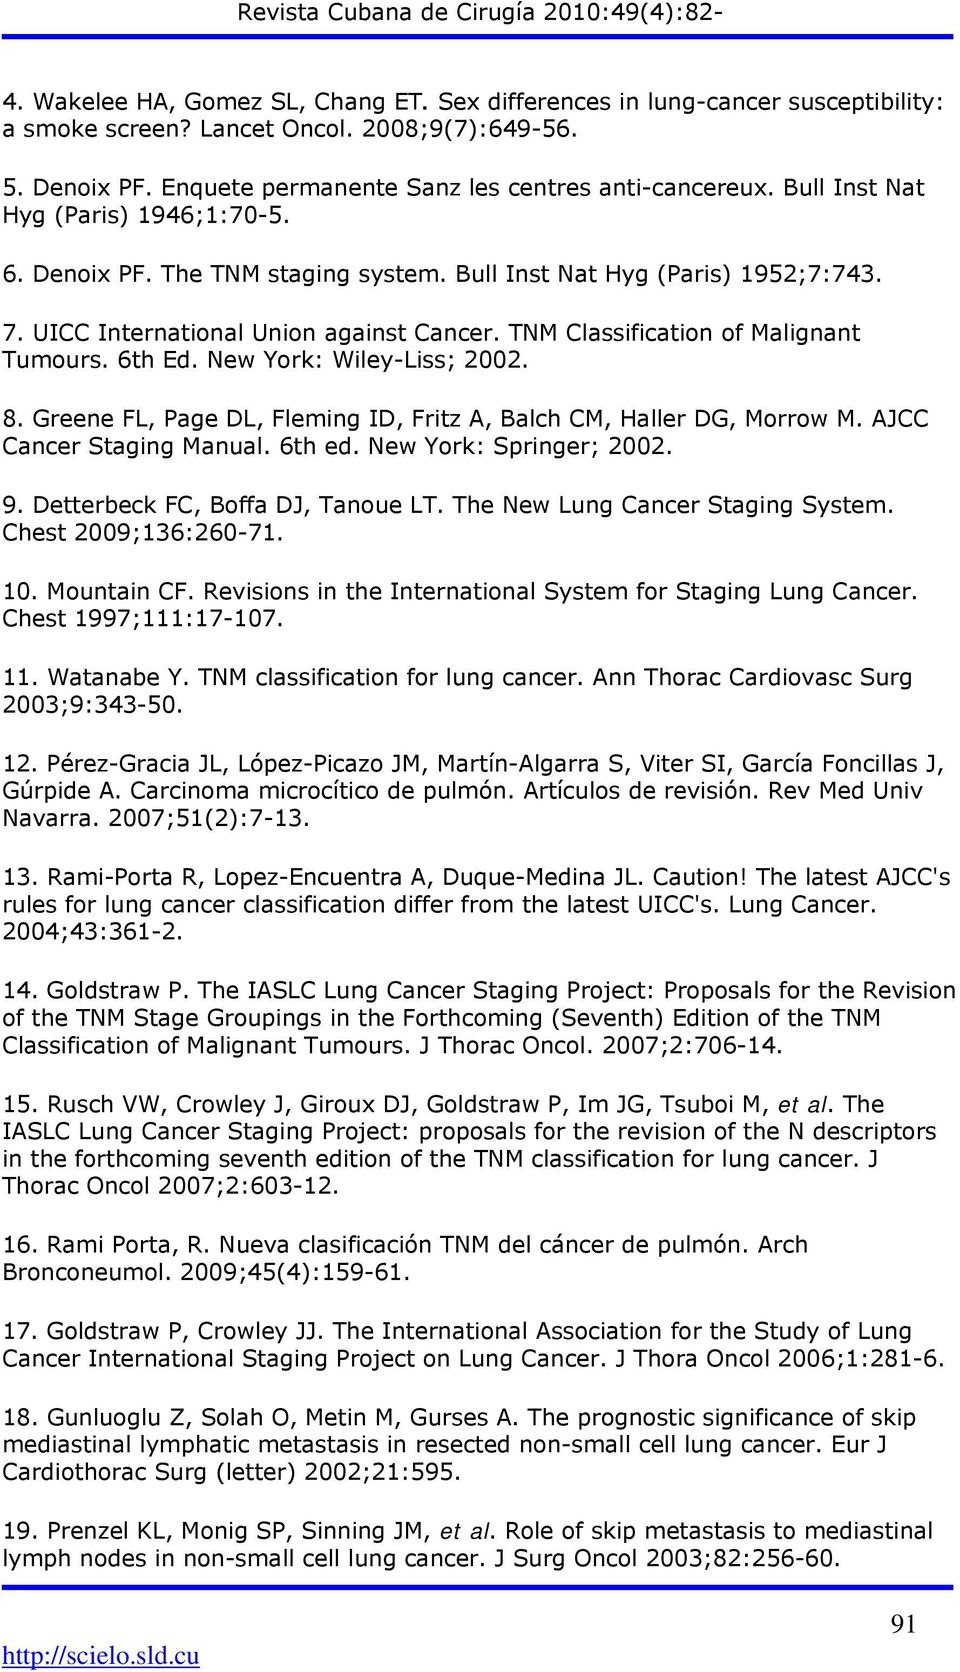 6th Ed. New York: Wiley-Liss; 2002. 8. Greene FL, Page DL, Fleming ID, Fritz A, Balch CM, Haller DG, Morrow M. AJCC Cancer Staging Manual. 6th ed. New York: Springer; 2002. 9.